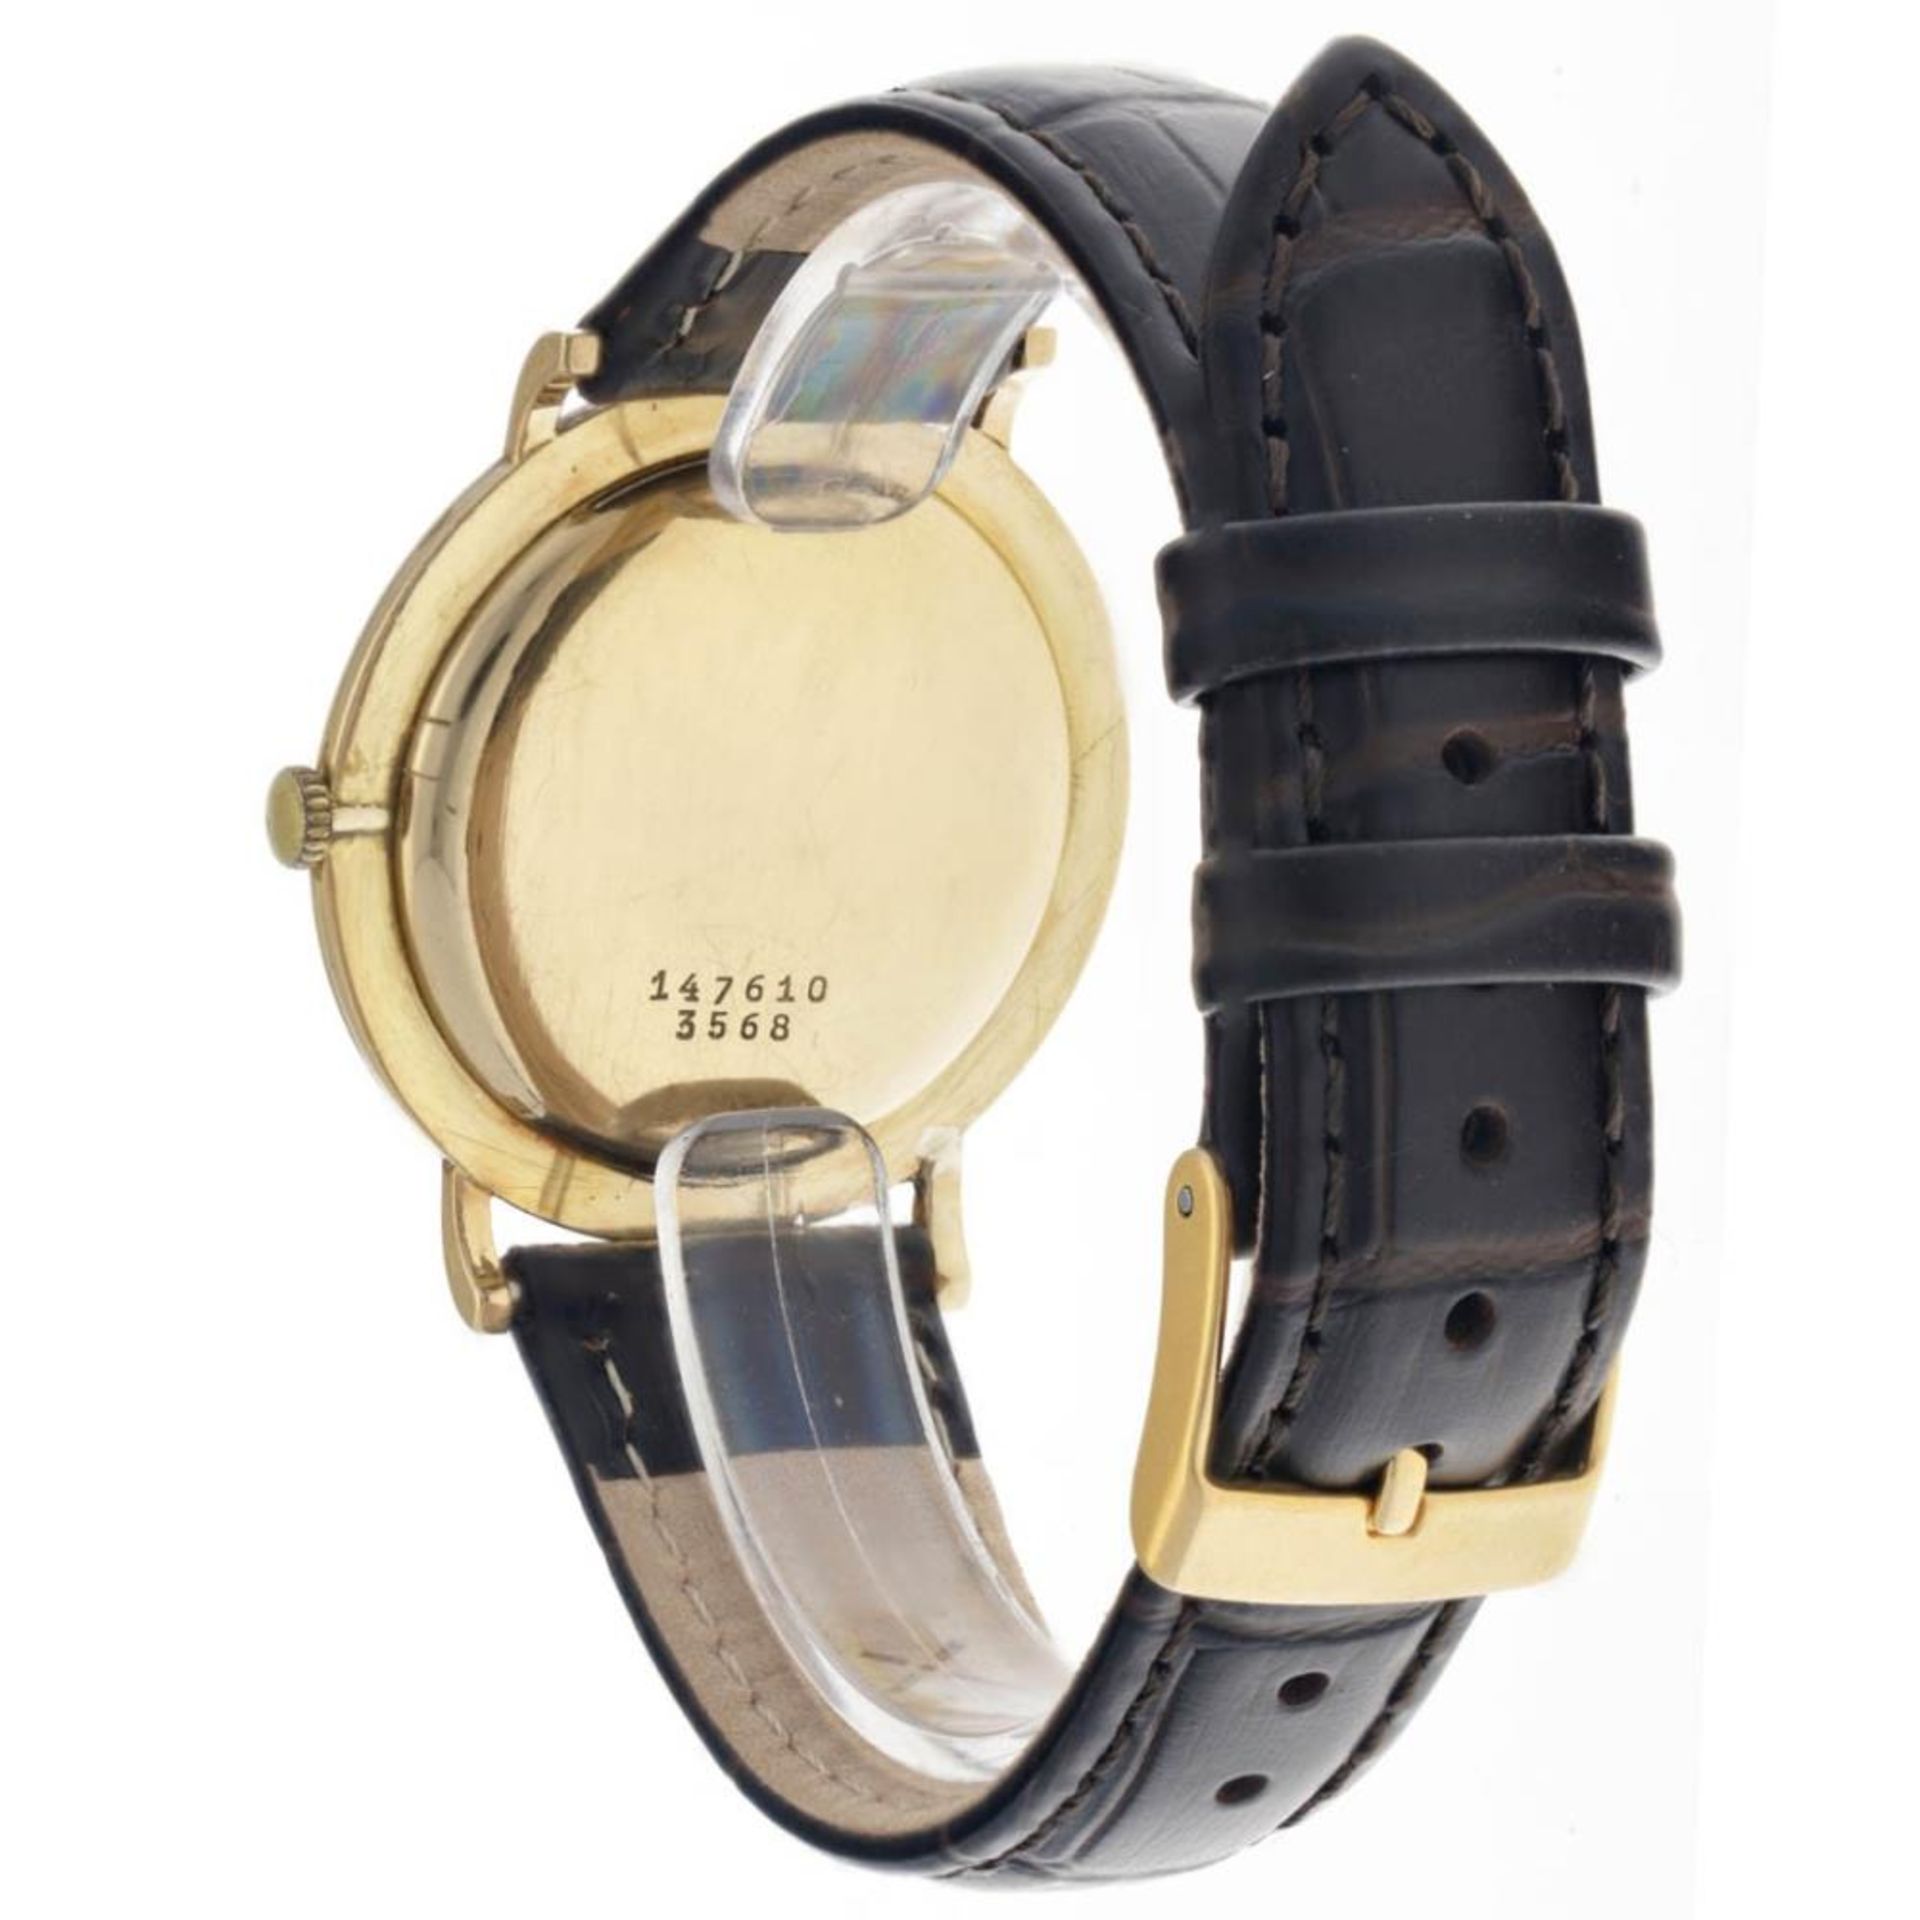 Baume & Mercier vintage 3568 - Men's watch - approx. 1950. - Image 6 of 12